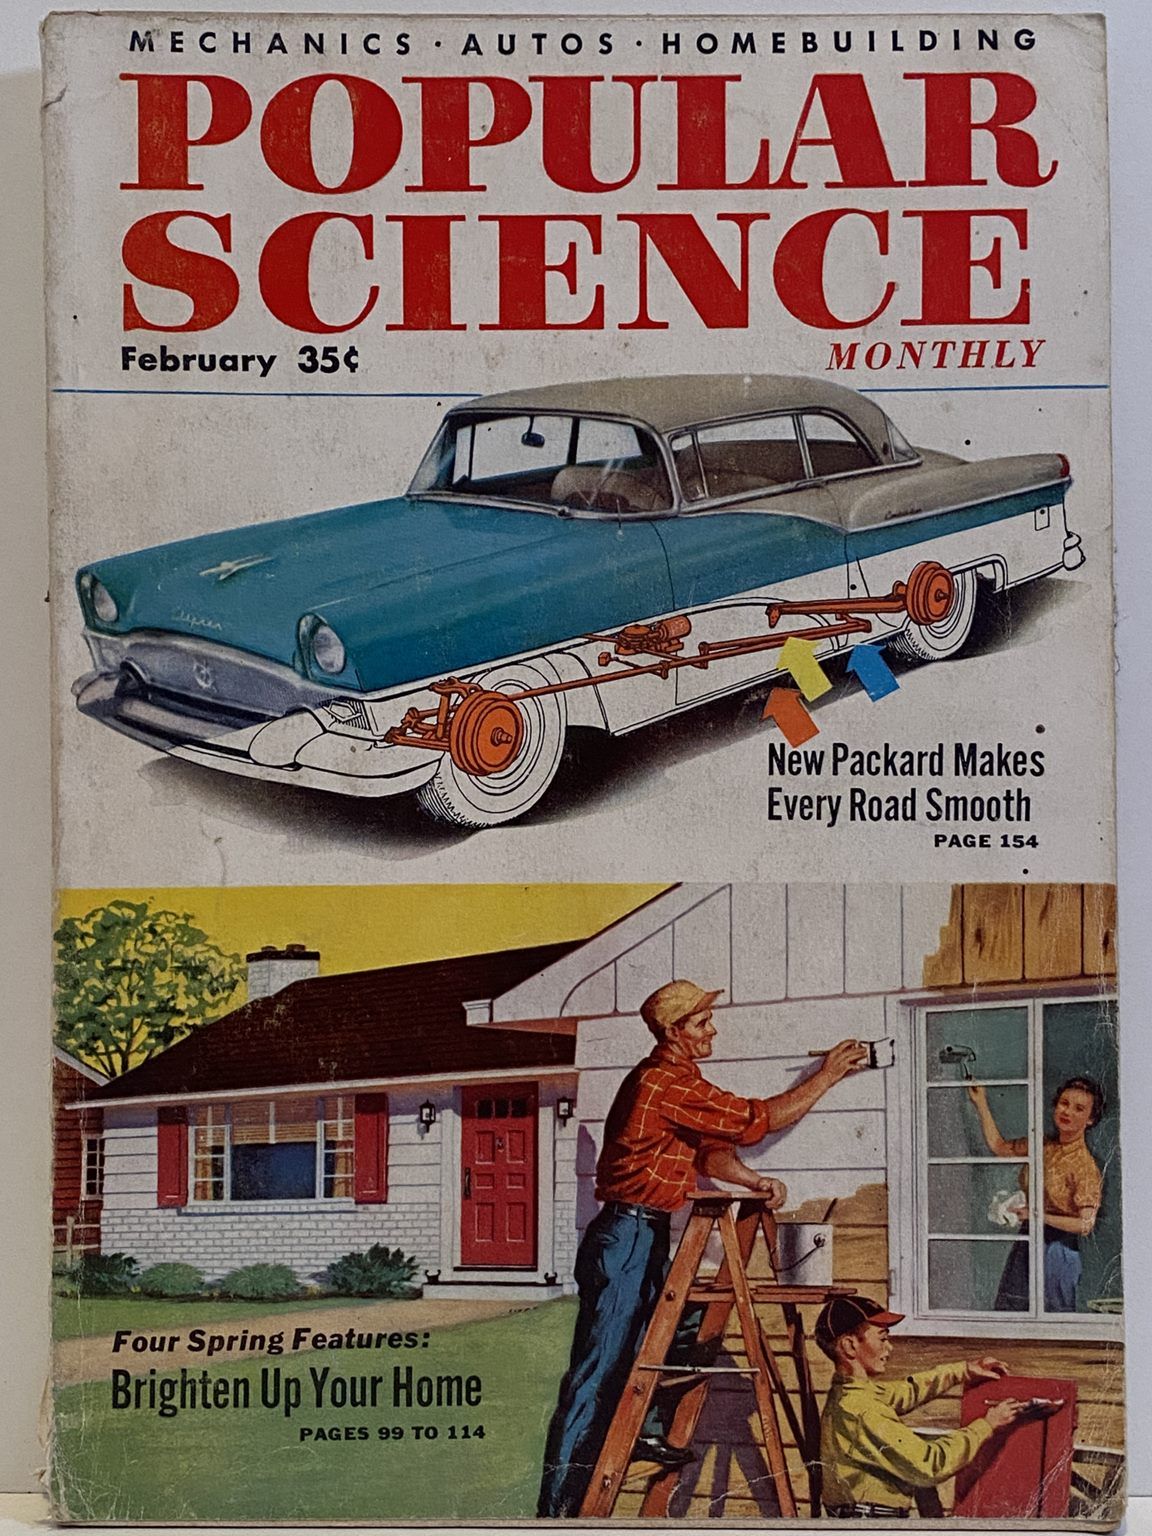 VINTAGE MAGAZINE: Popular Science, Vol. 166, No. 2 - February 1955